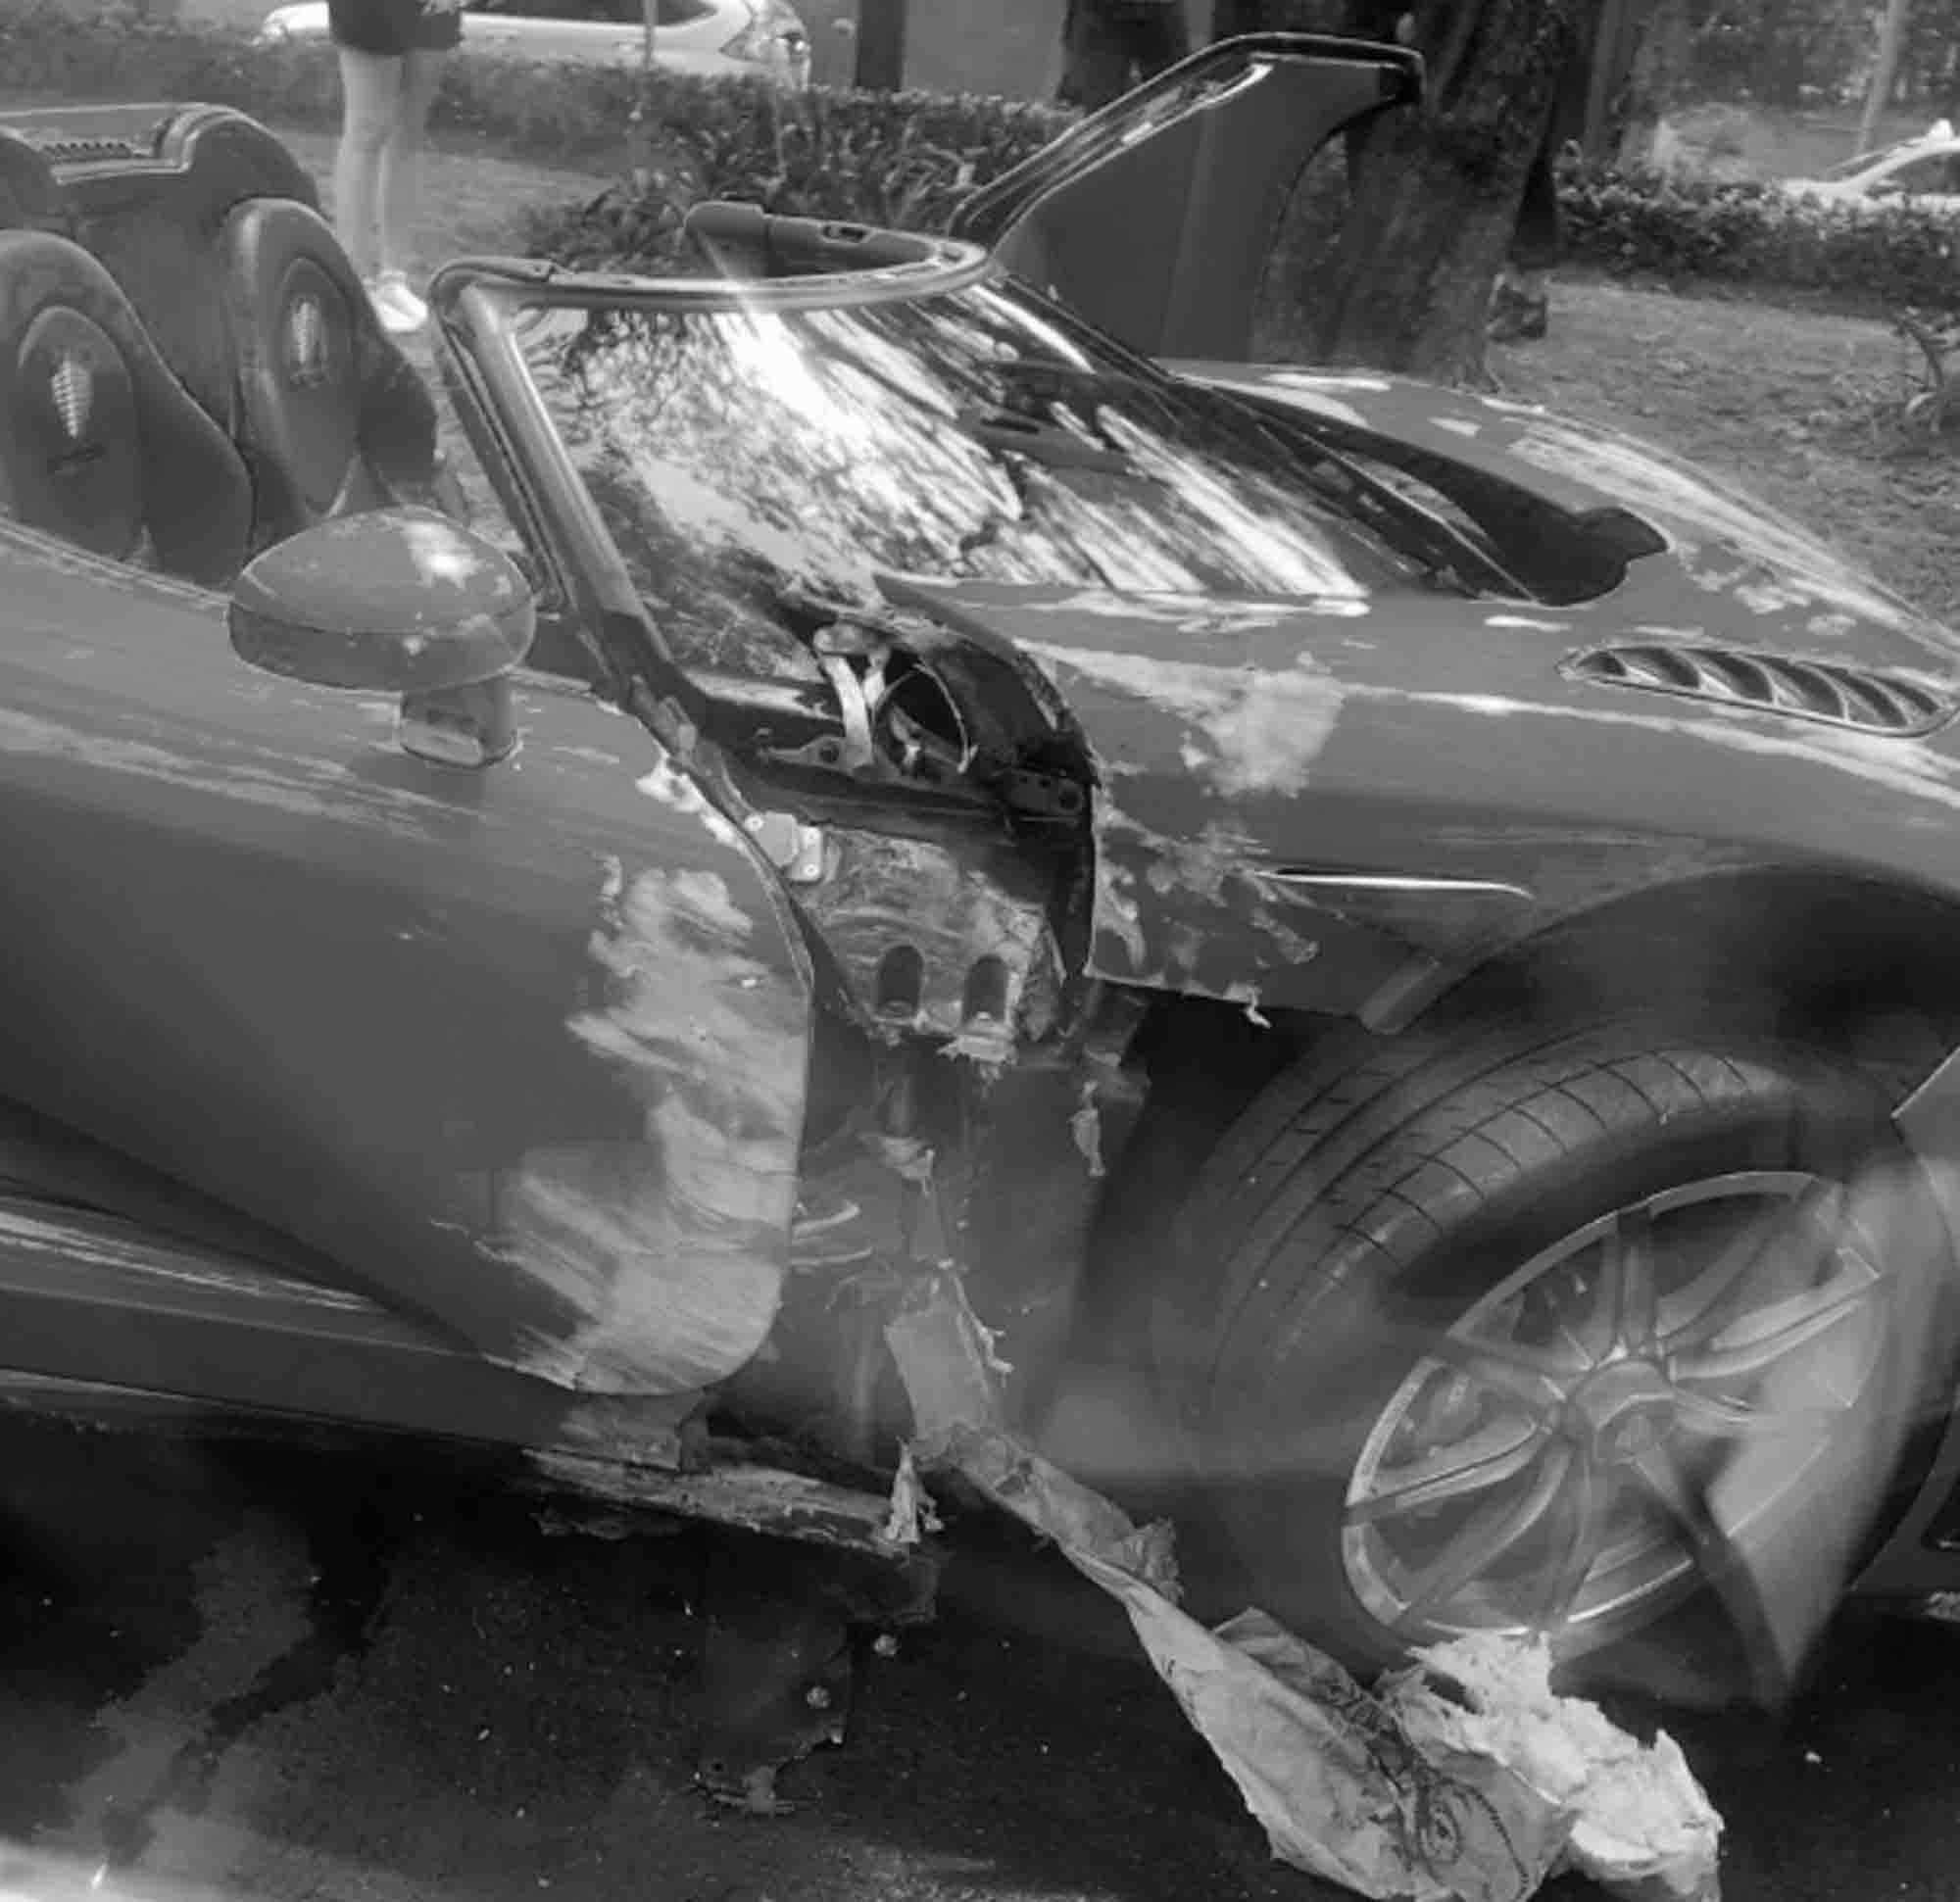 Read more about the article Unique 1-M-GBP Supercar Damaged In Crash